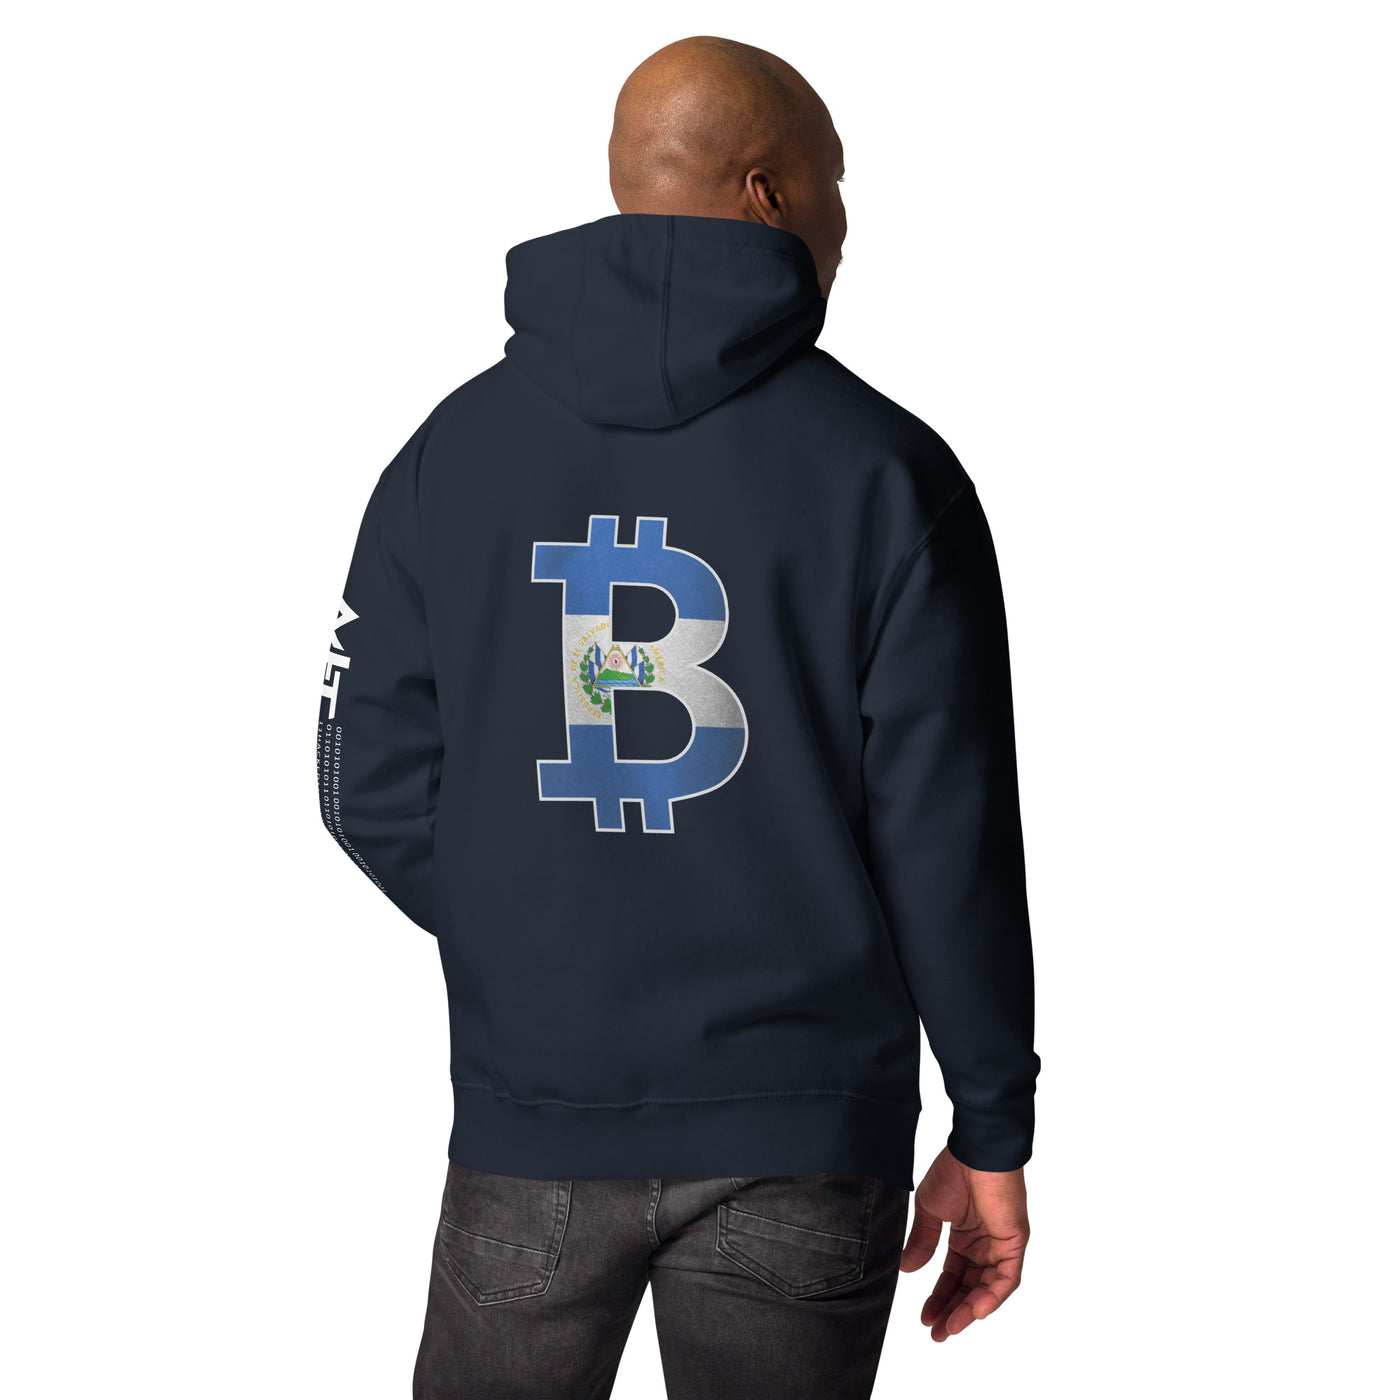 Blue Flag inside Bitcoin - Unisex Hoodie